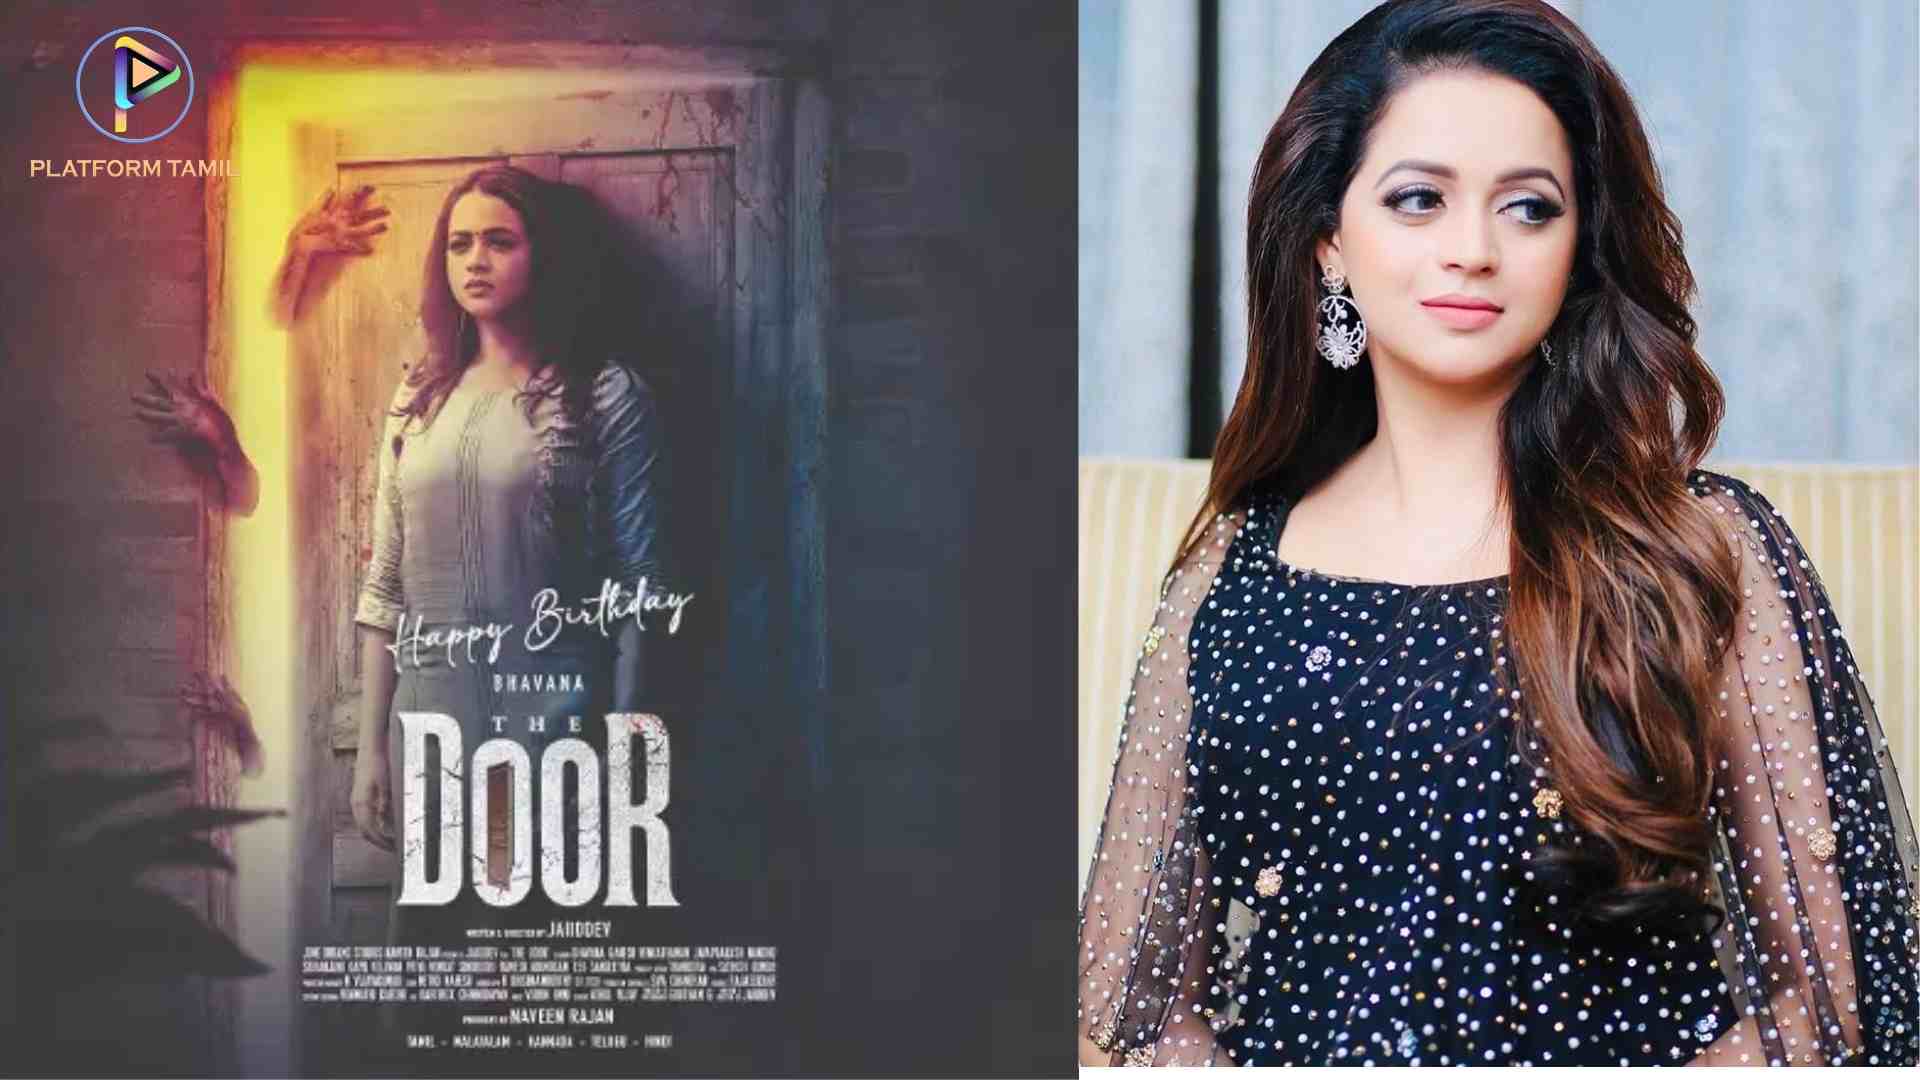 The Door Movie First Look - Platform Tamil